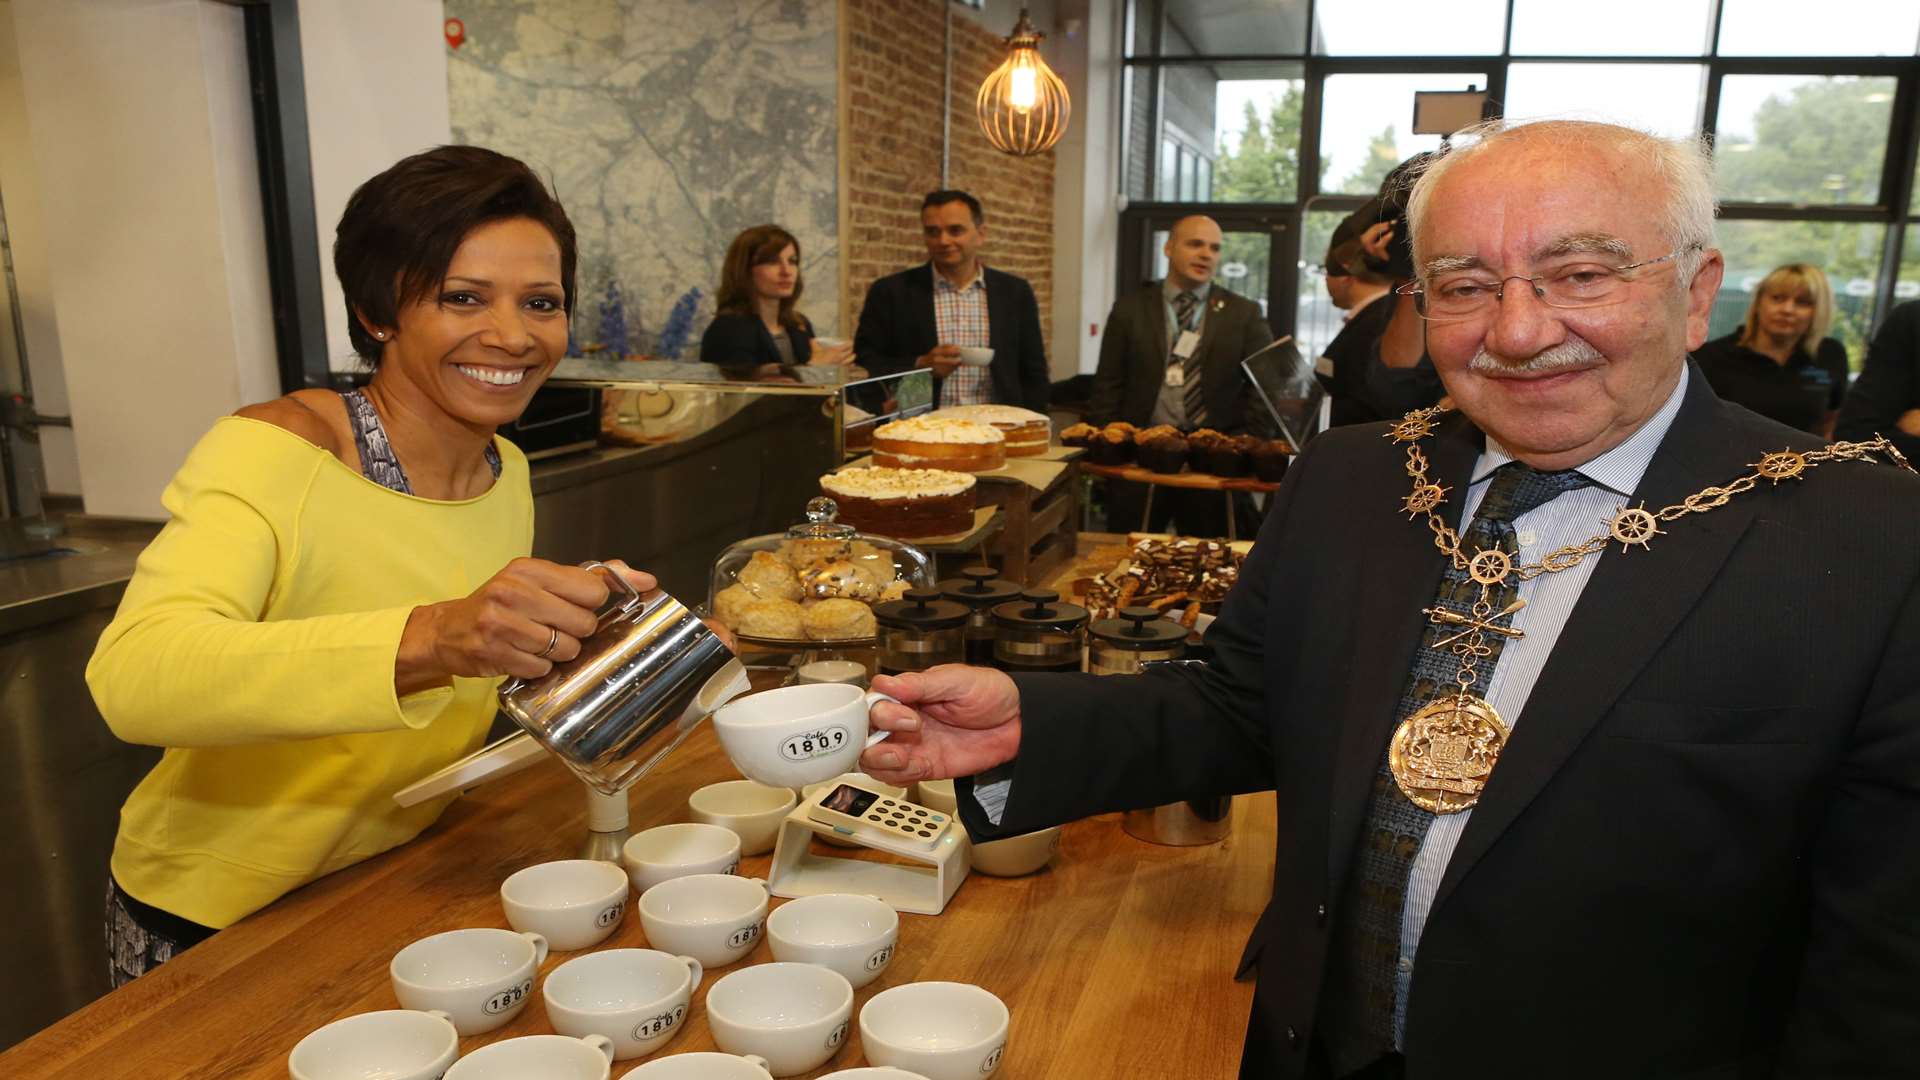 Dame Kelly serves Mayor of Gravesham Cllr Harold Craske at the opening of the cafe in June. Picture: John Westhrop